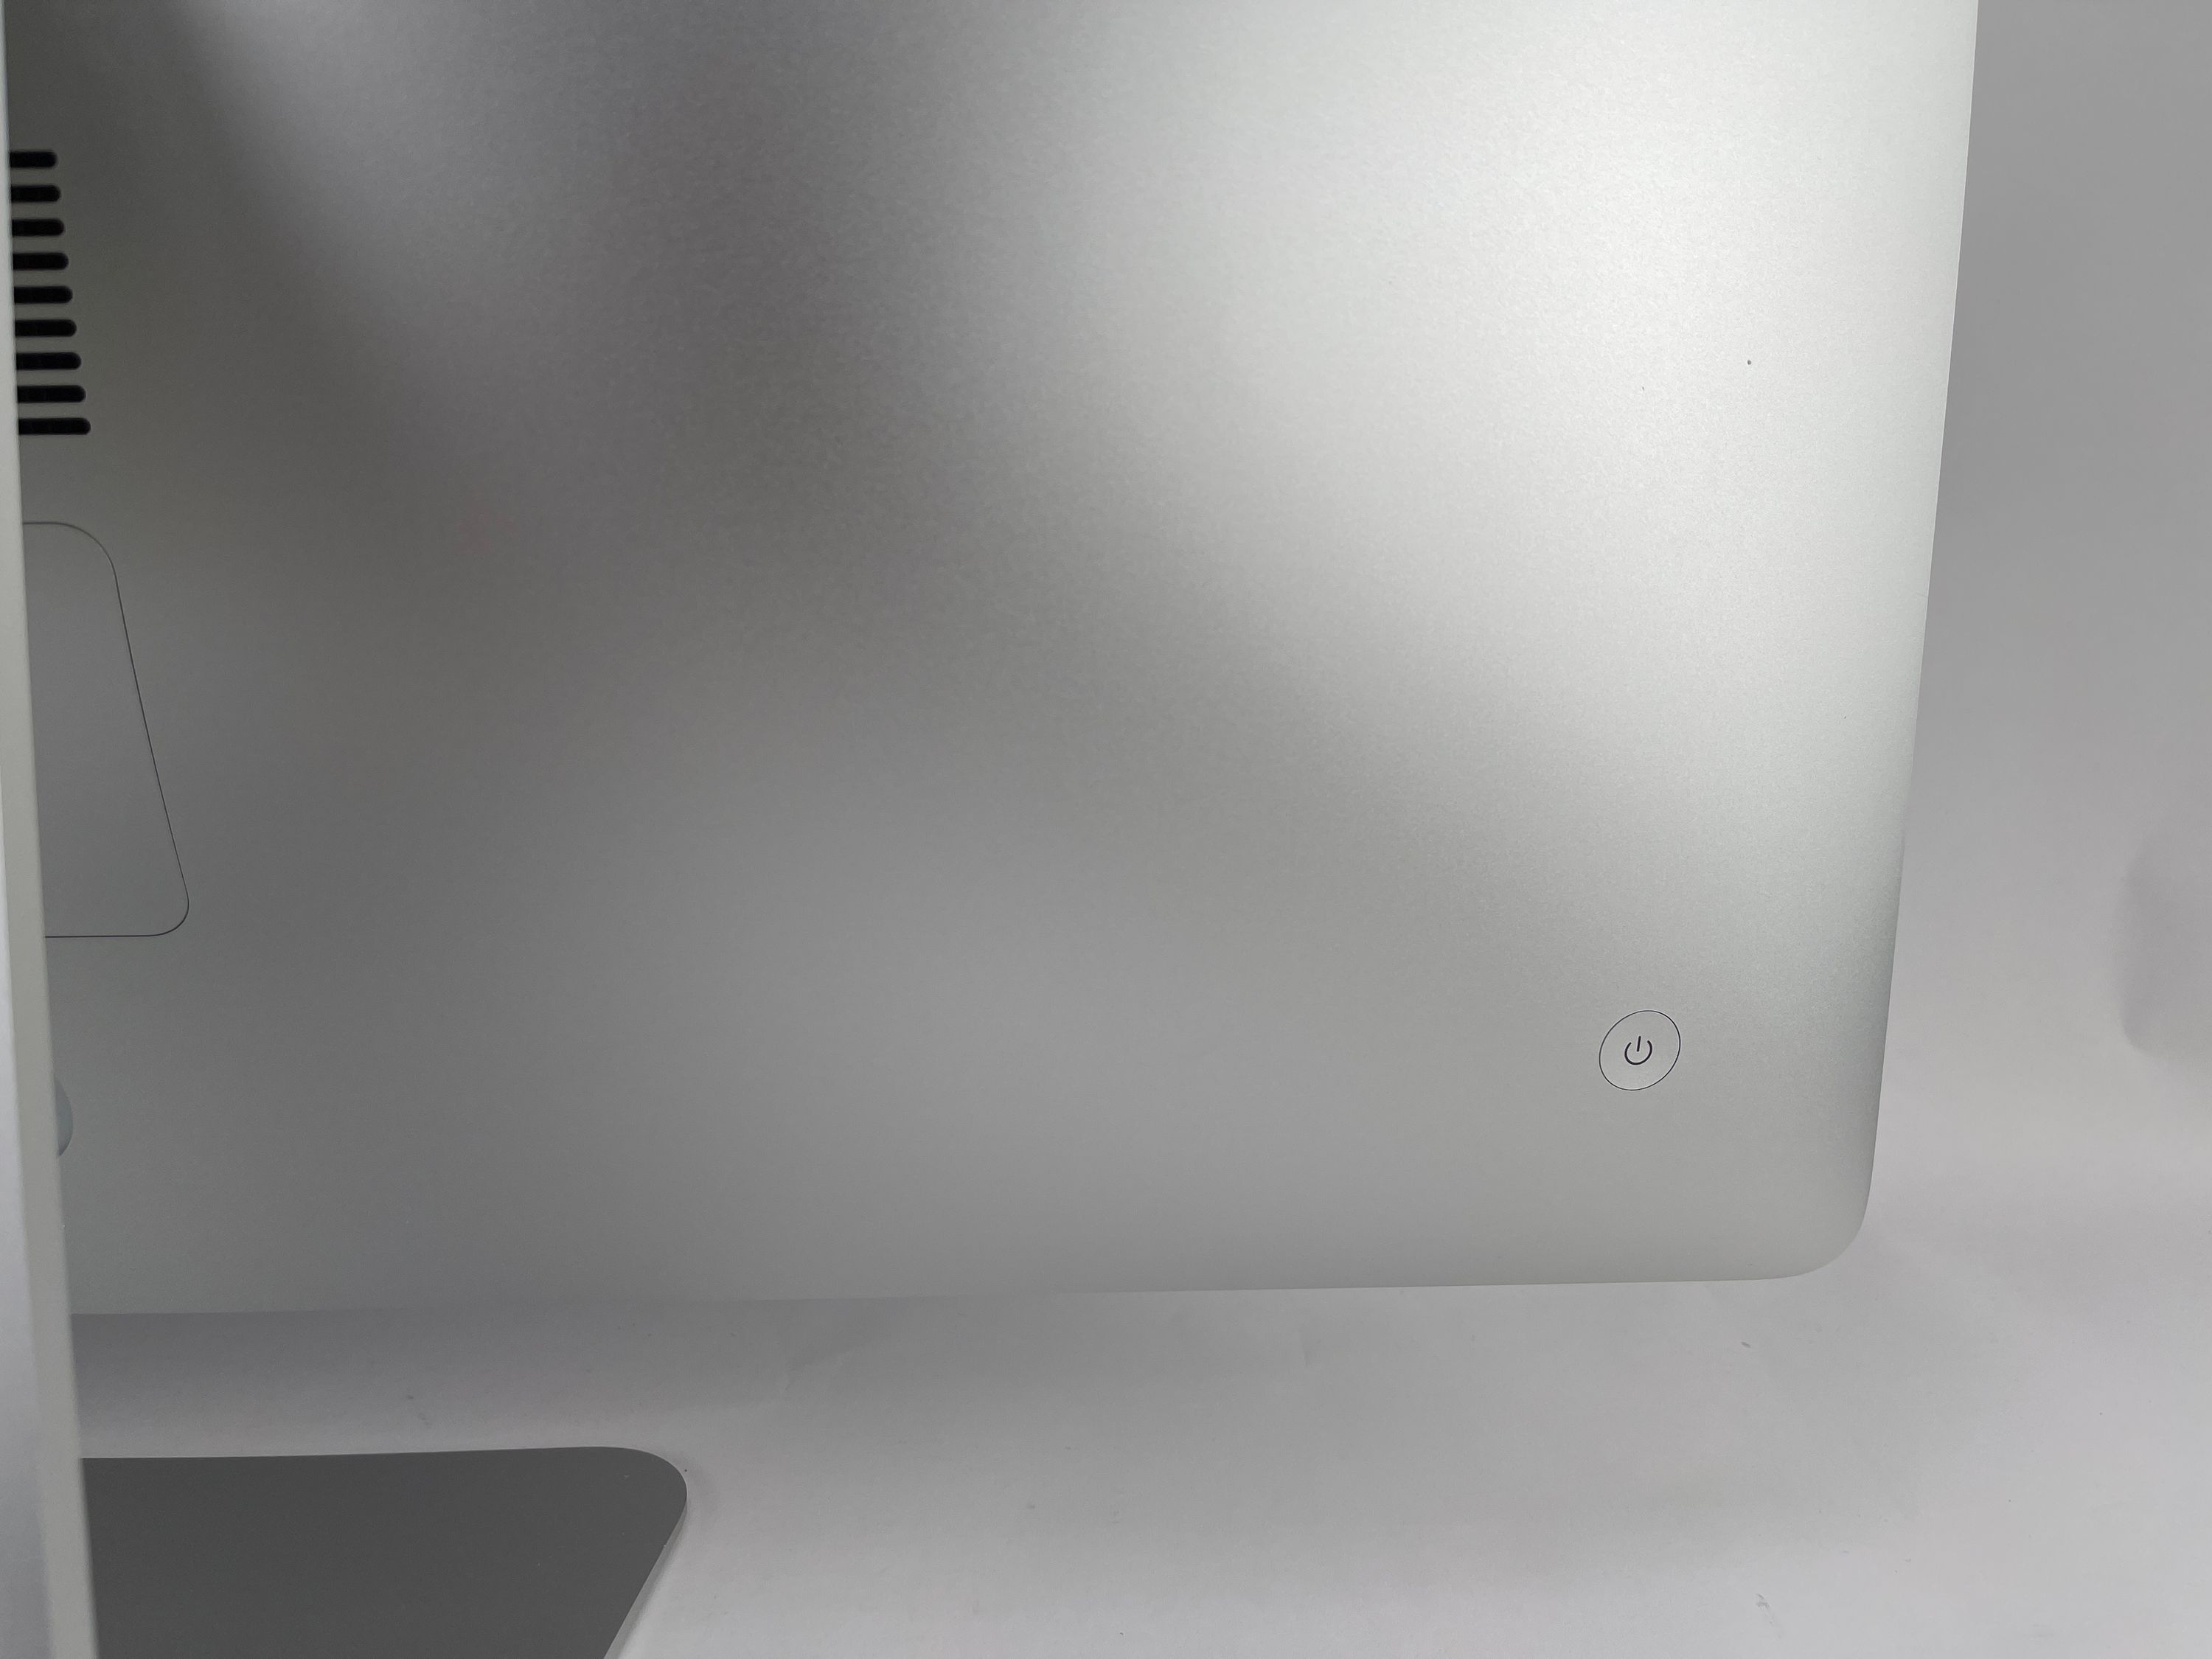 Apple iMac 27" (2020) 5K Retina i9 3,6 GHz 10-Core - Silber 